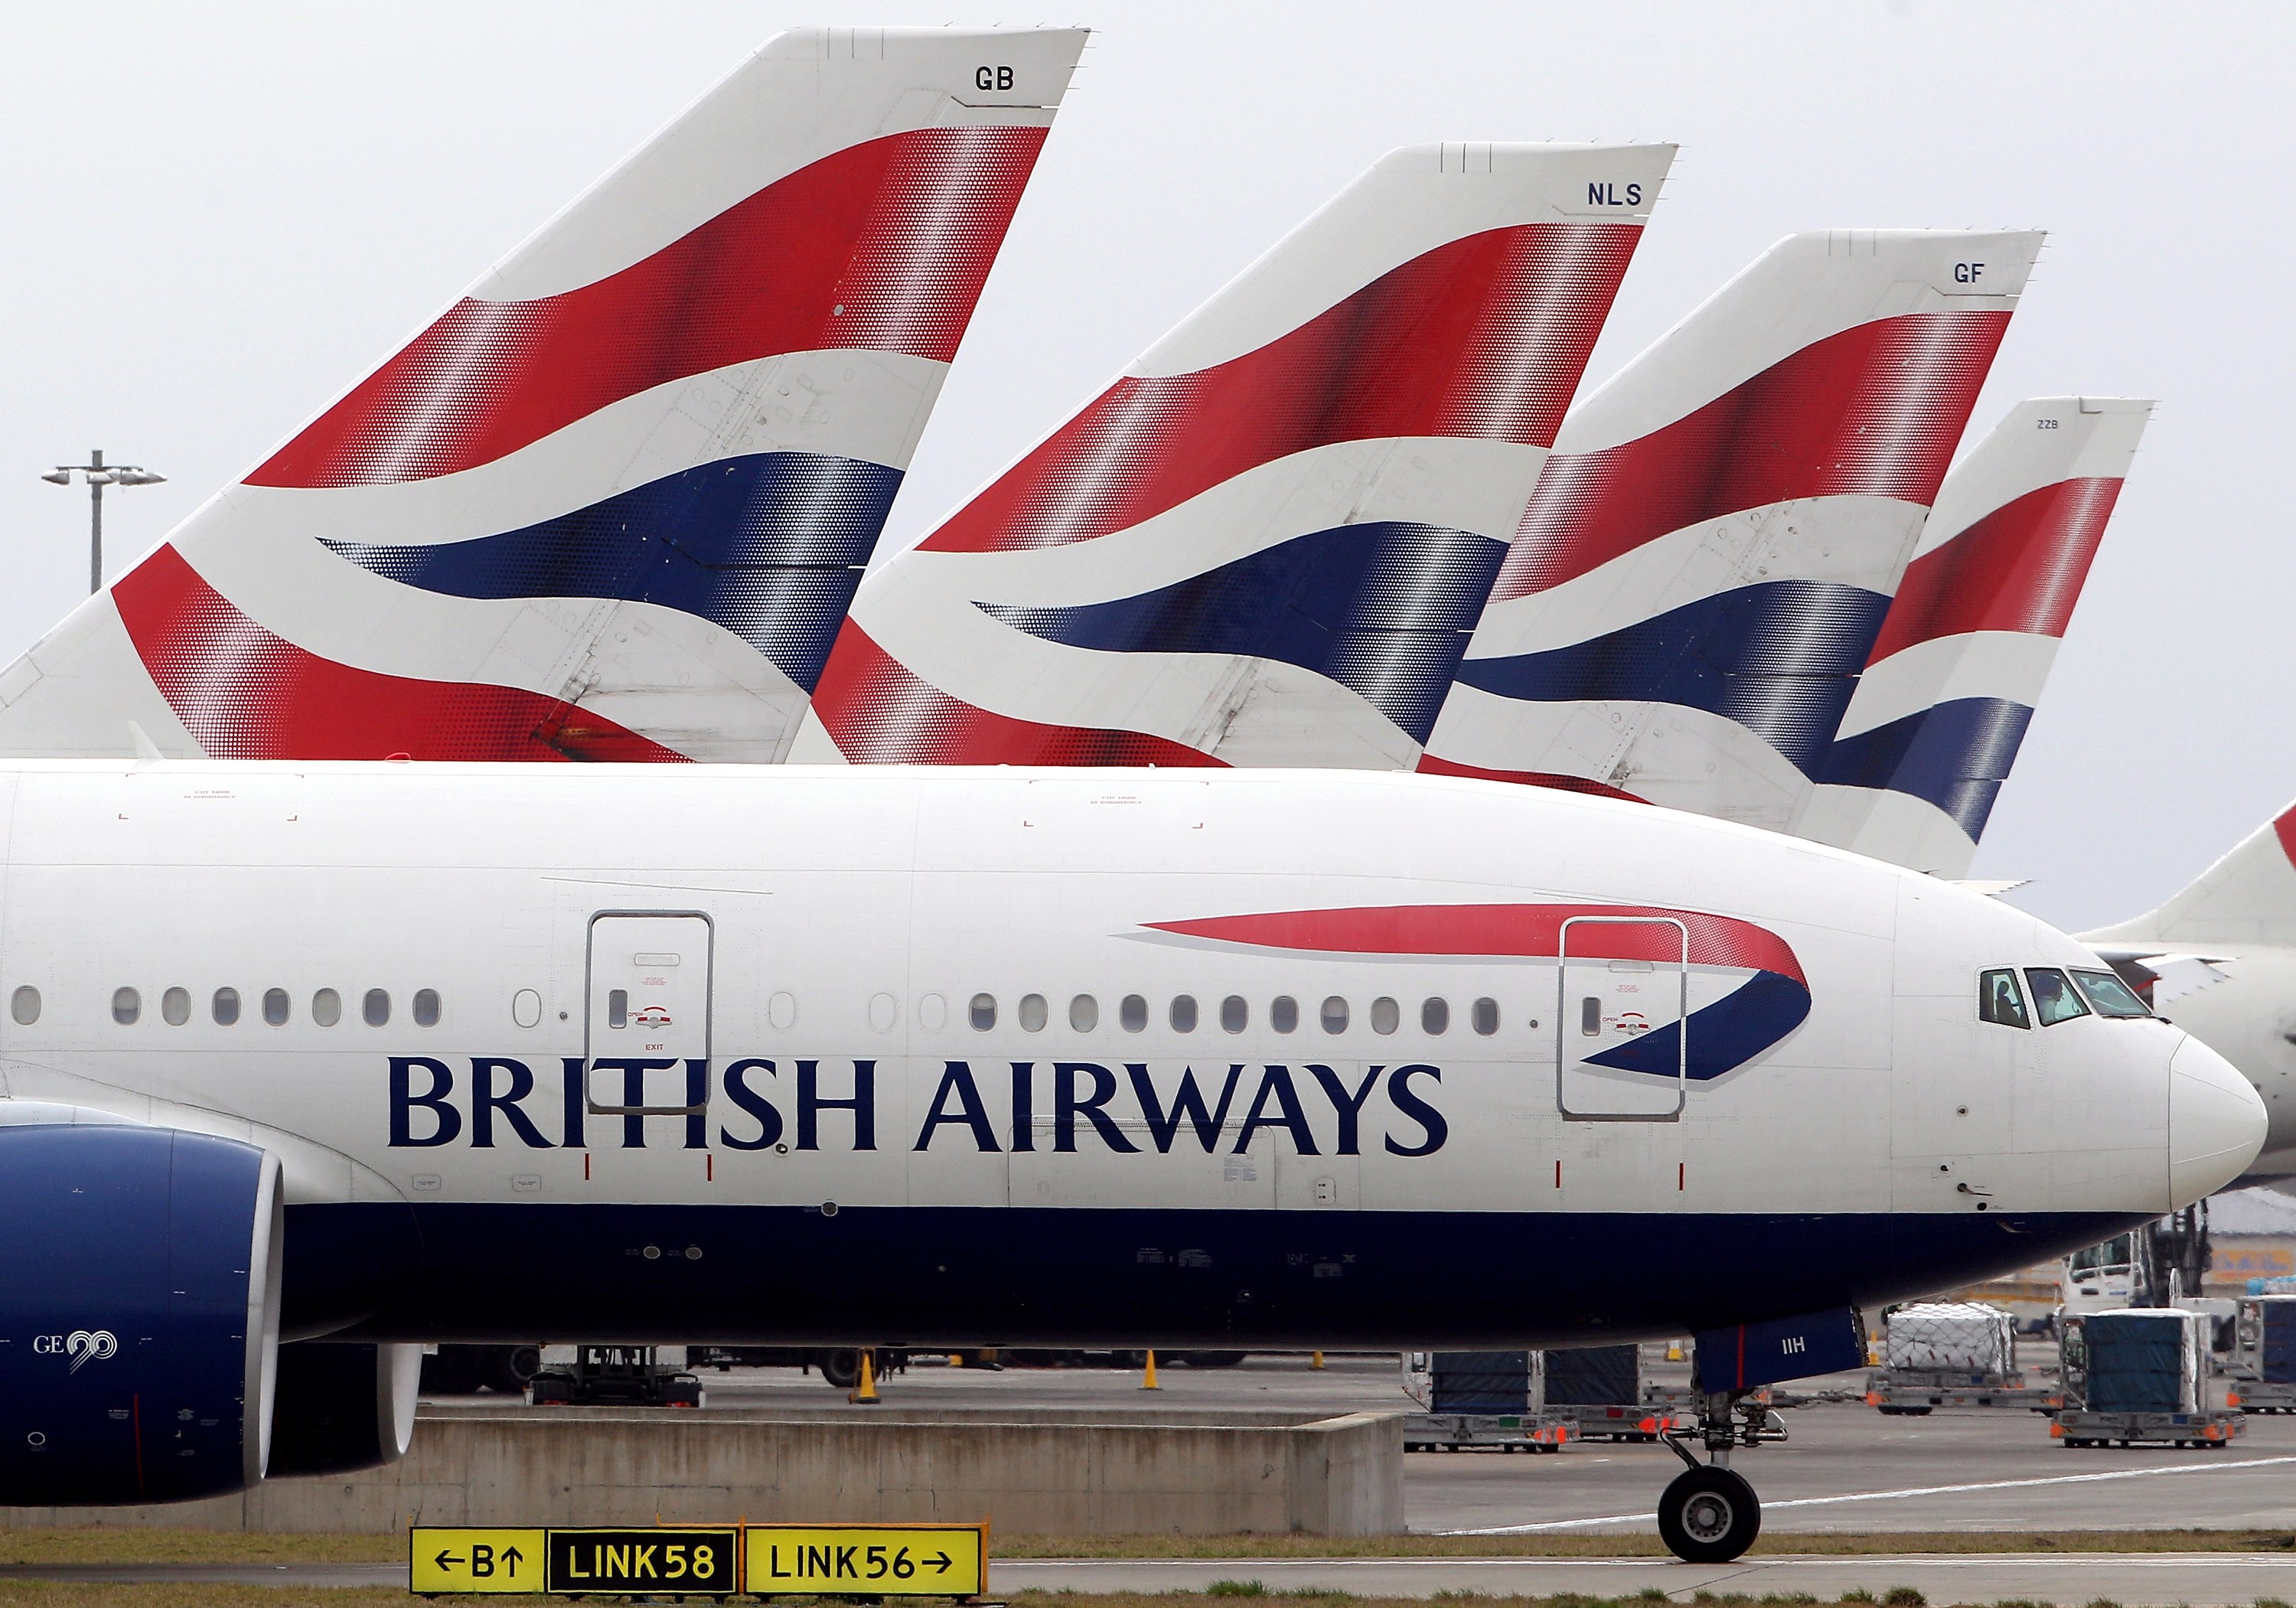 Book British Airways Flights with Asia Miles to Save Big